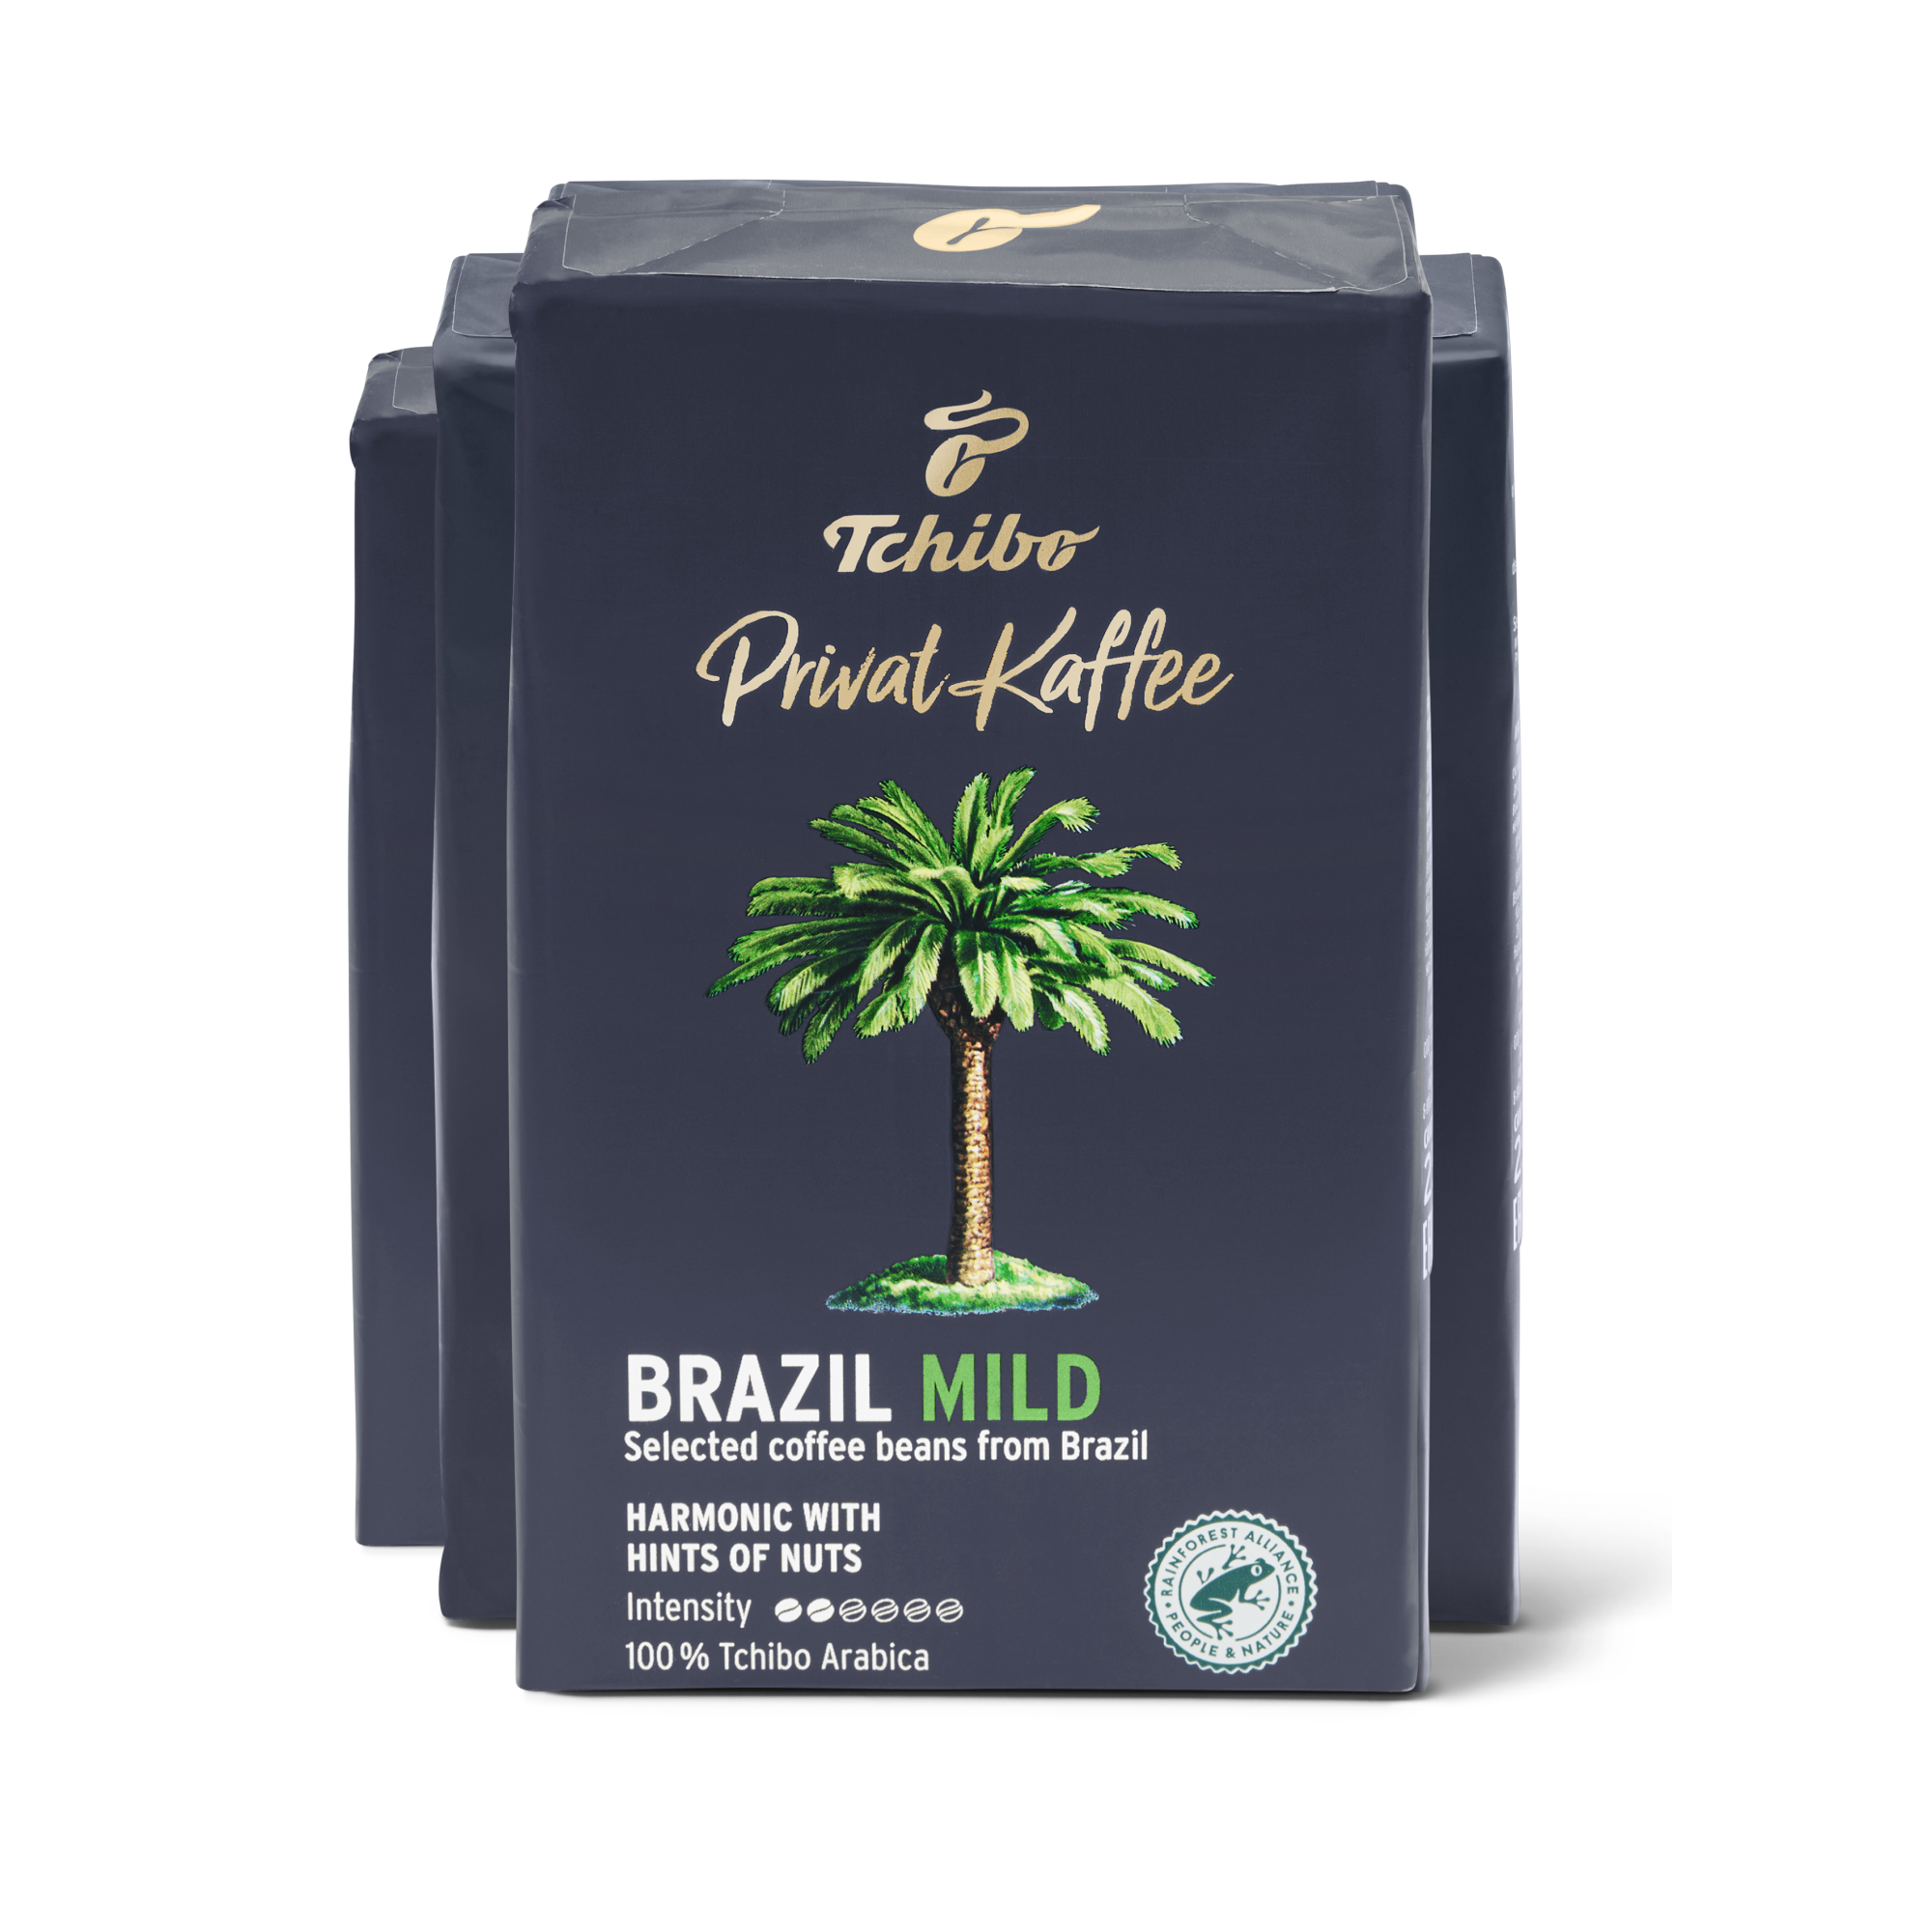 Privat Kaffee Brazil Mild Ground Coffee 8.8oz